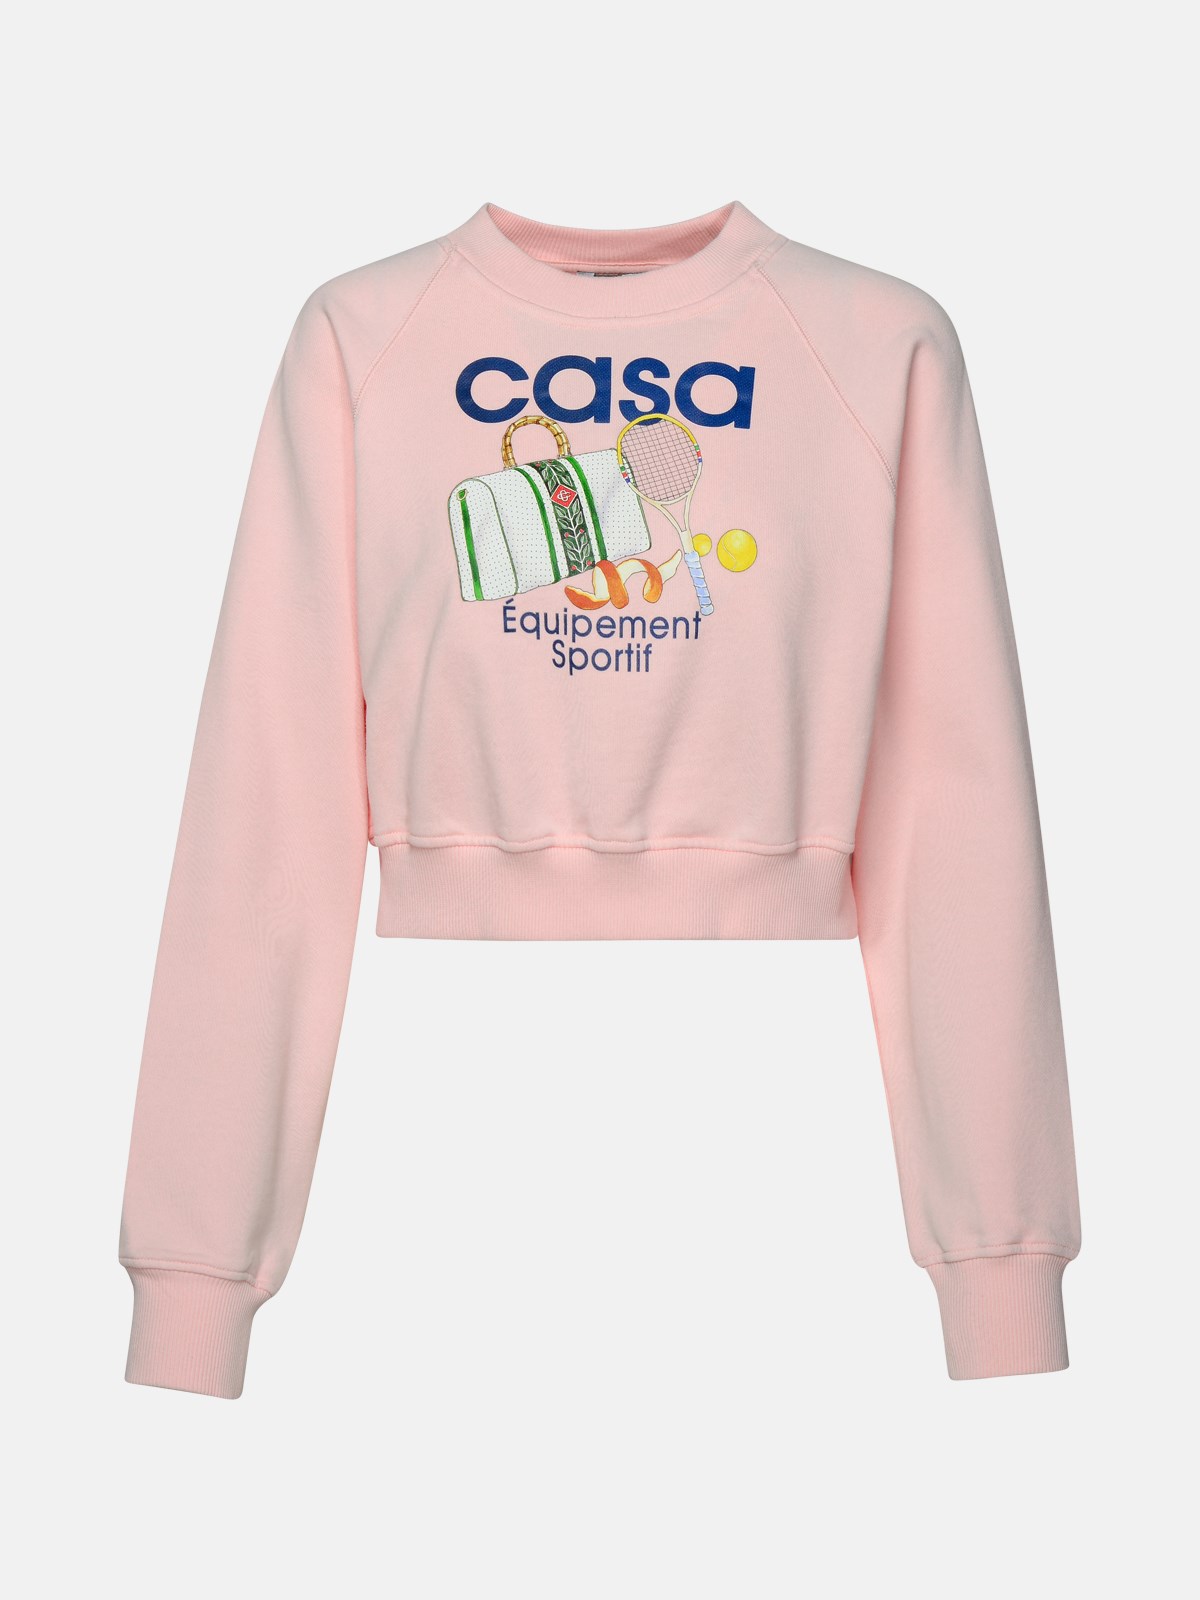 Casablanca 'equipement Sportif' Pink Organic Cotton Sweatshirt